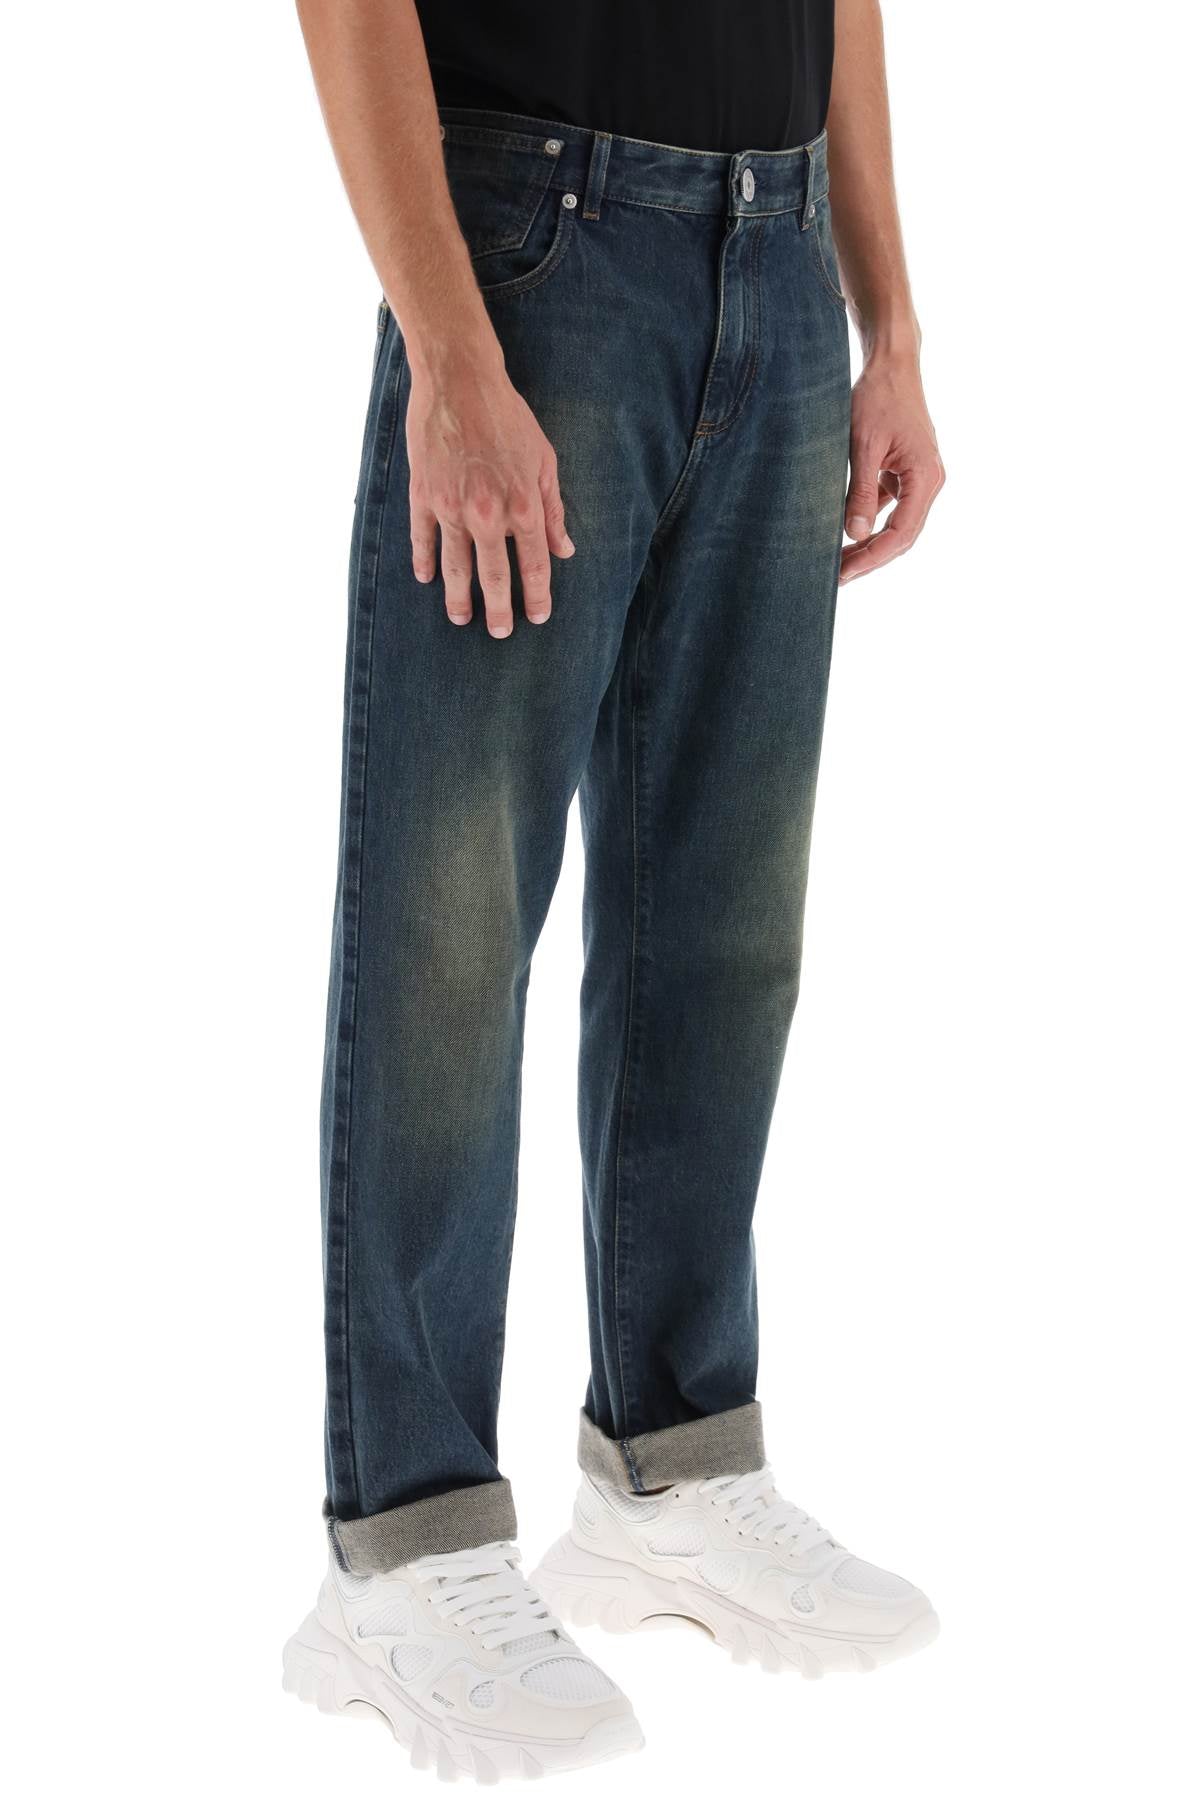 Balmain Balmain vintage jeans